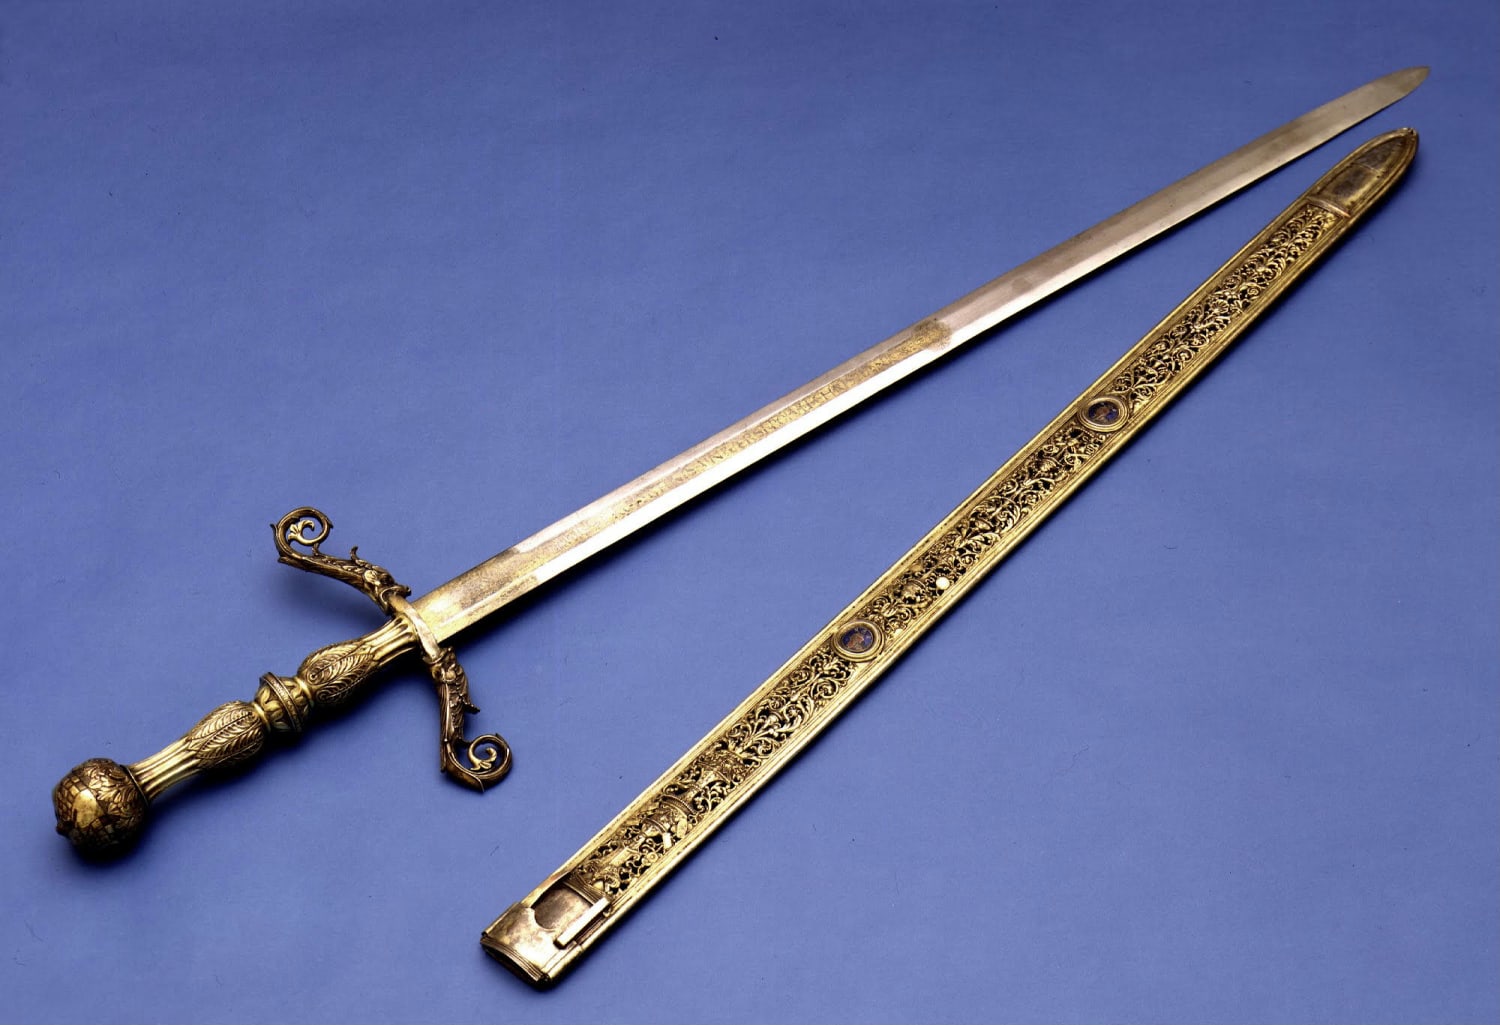 The sword given by Pope Innocent VIII to Íñigo López de Mendoza, 1486.